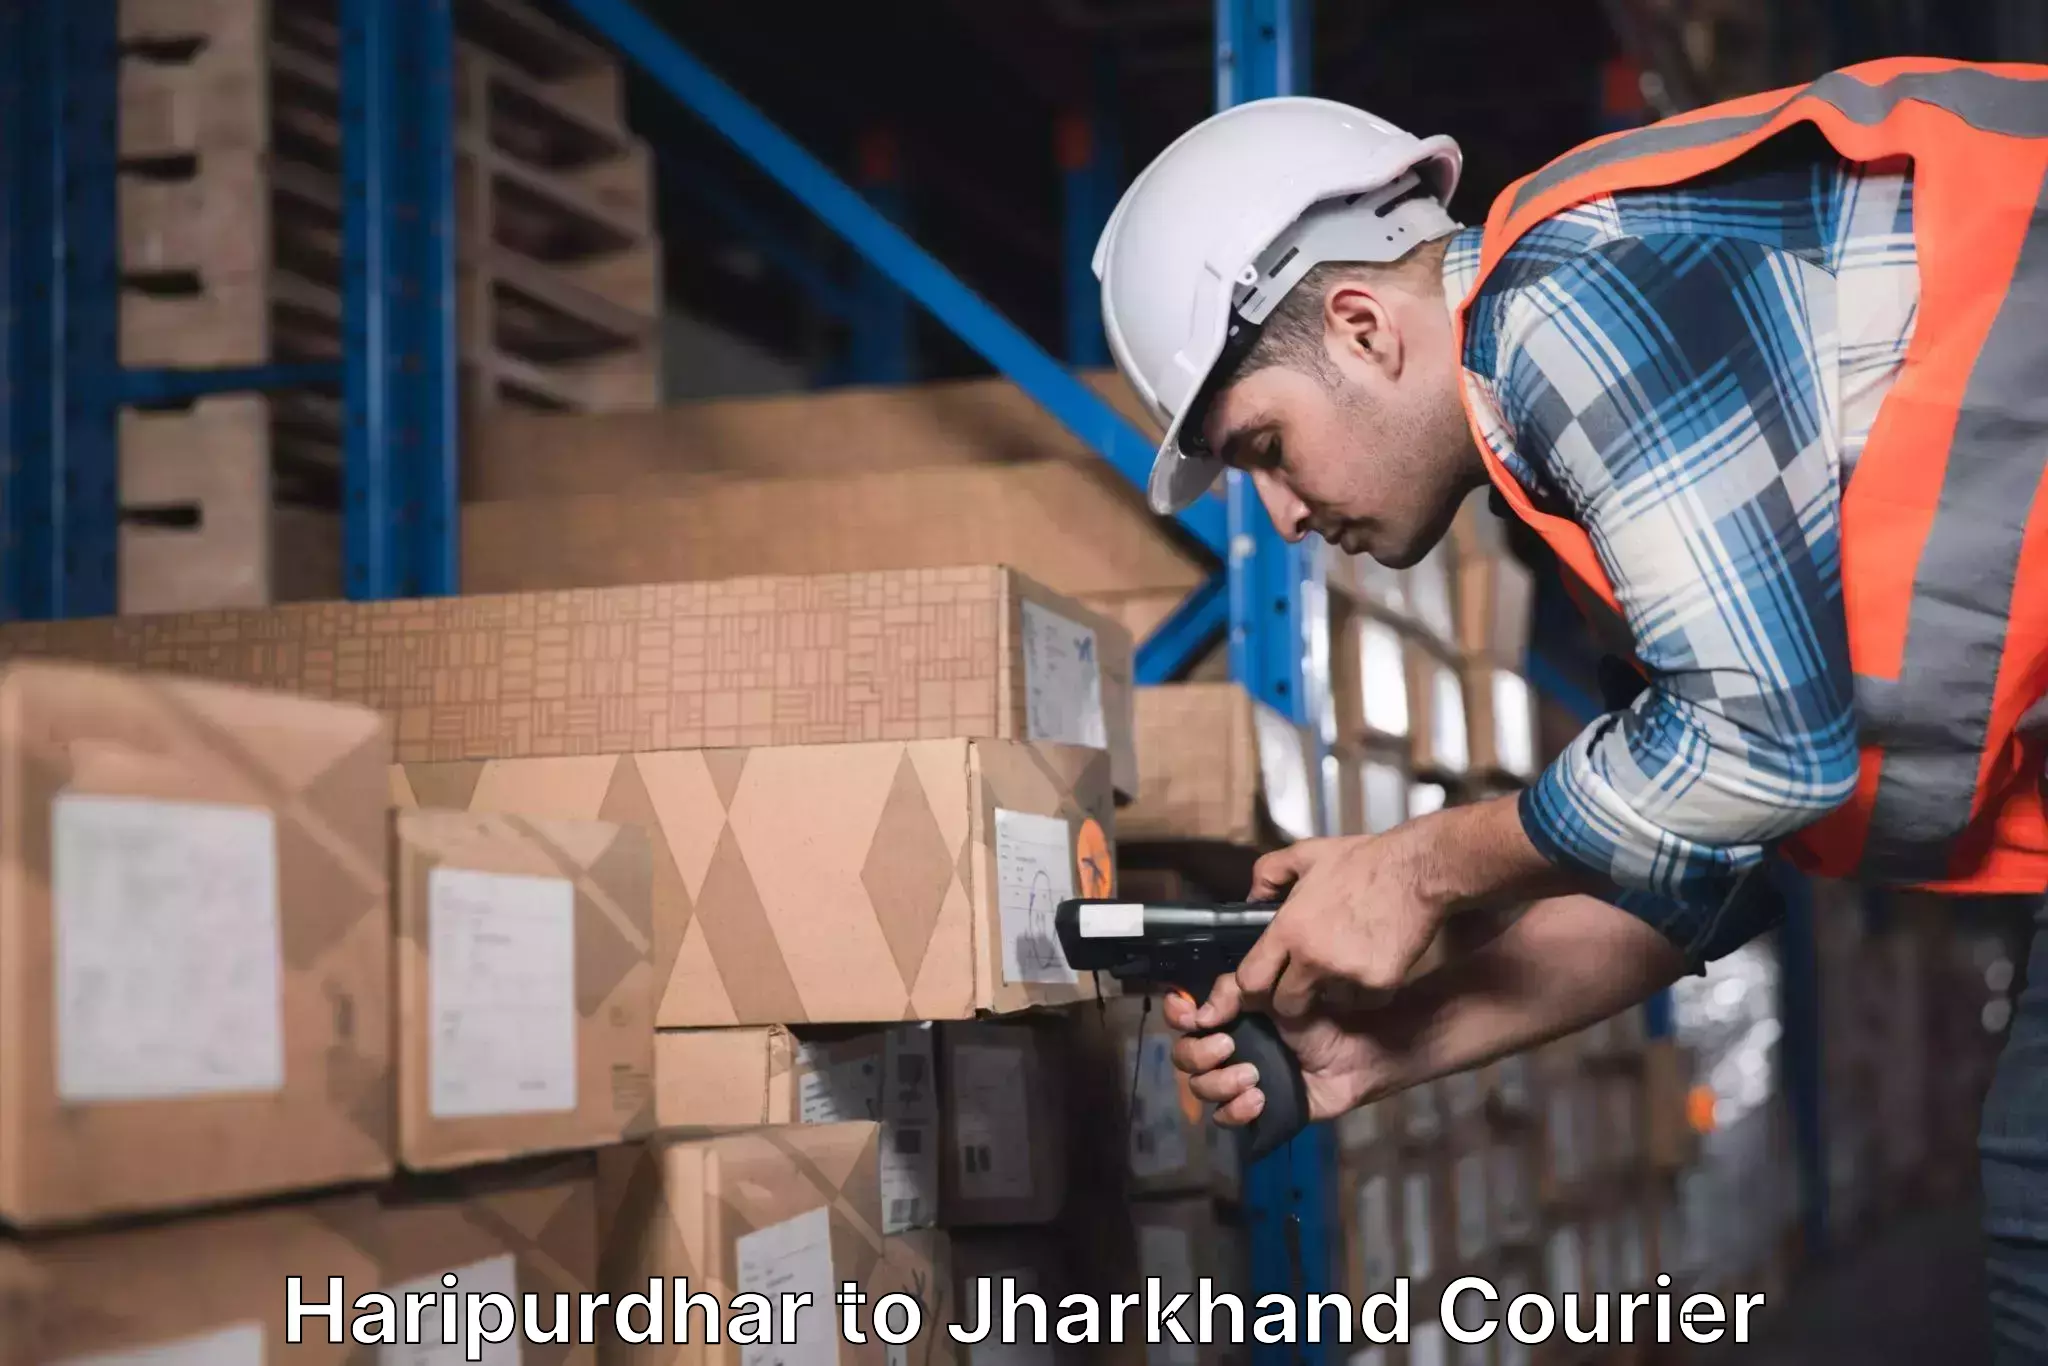 Courier service booking in Haripurdhar to Medininagar